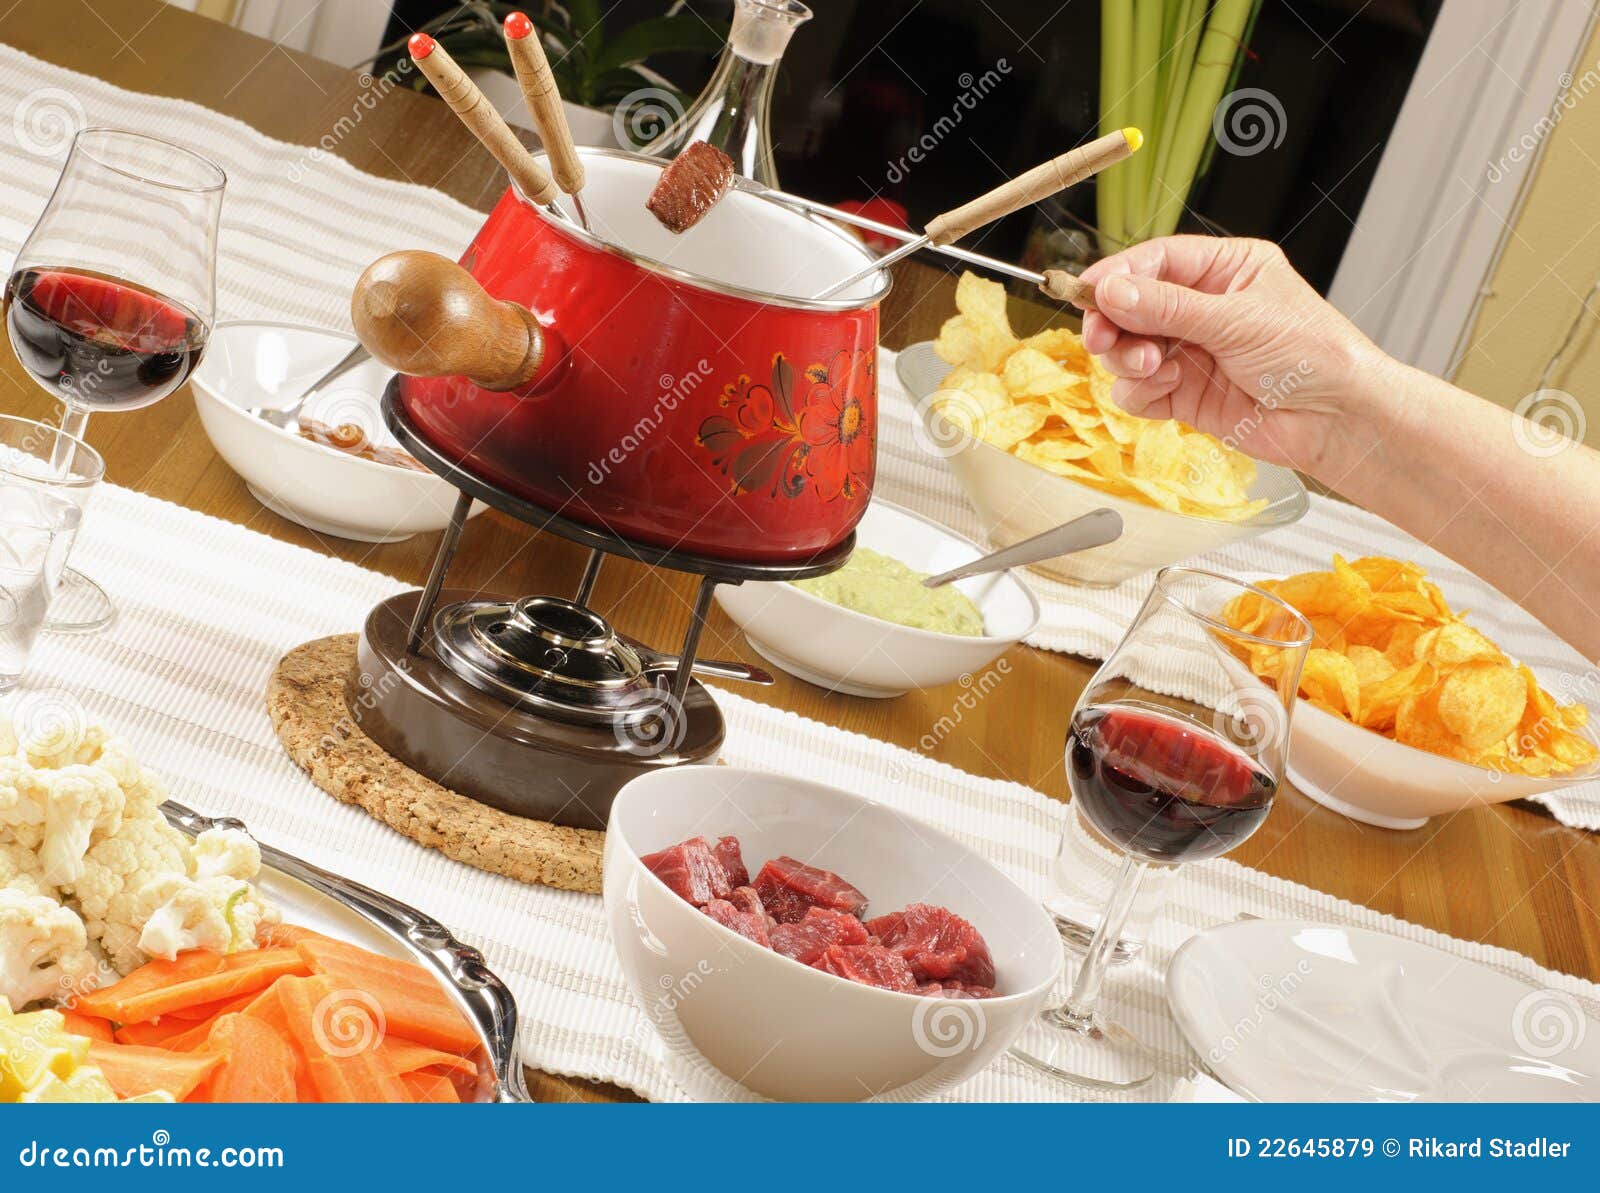 Fondue bourguignonne stock image. Image of meal, luxury - 22645879